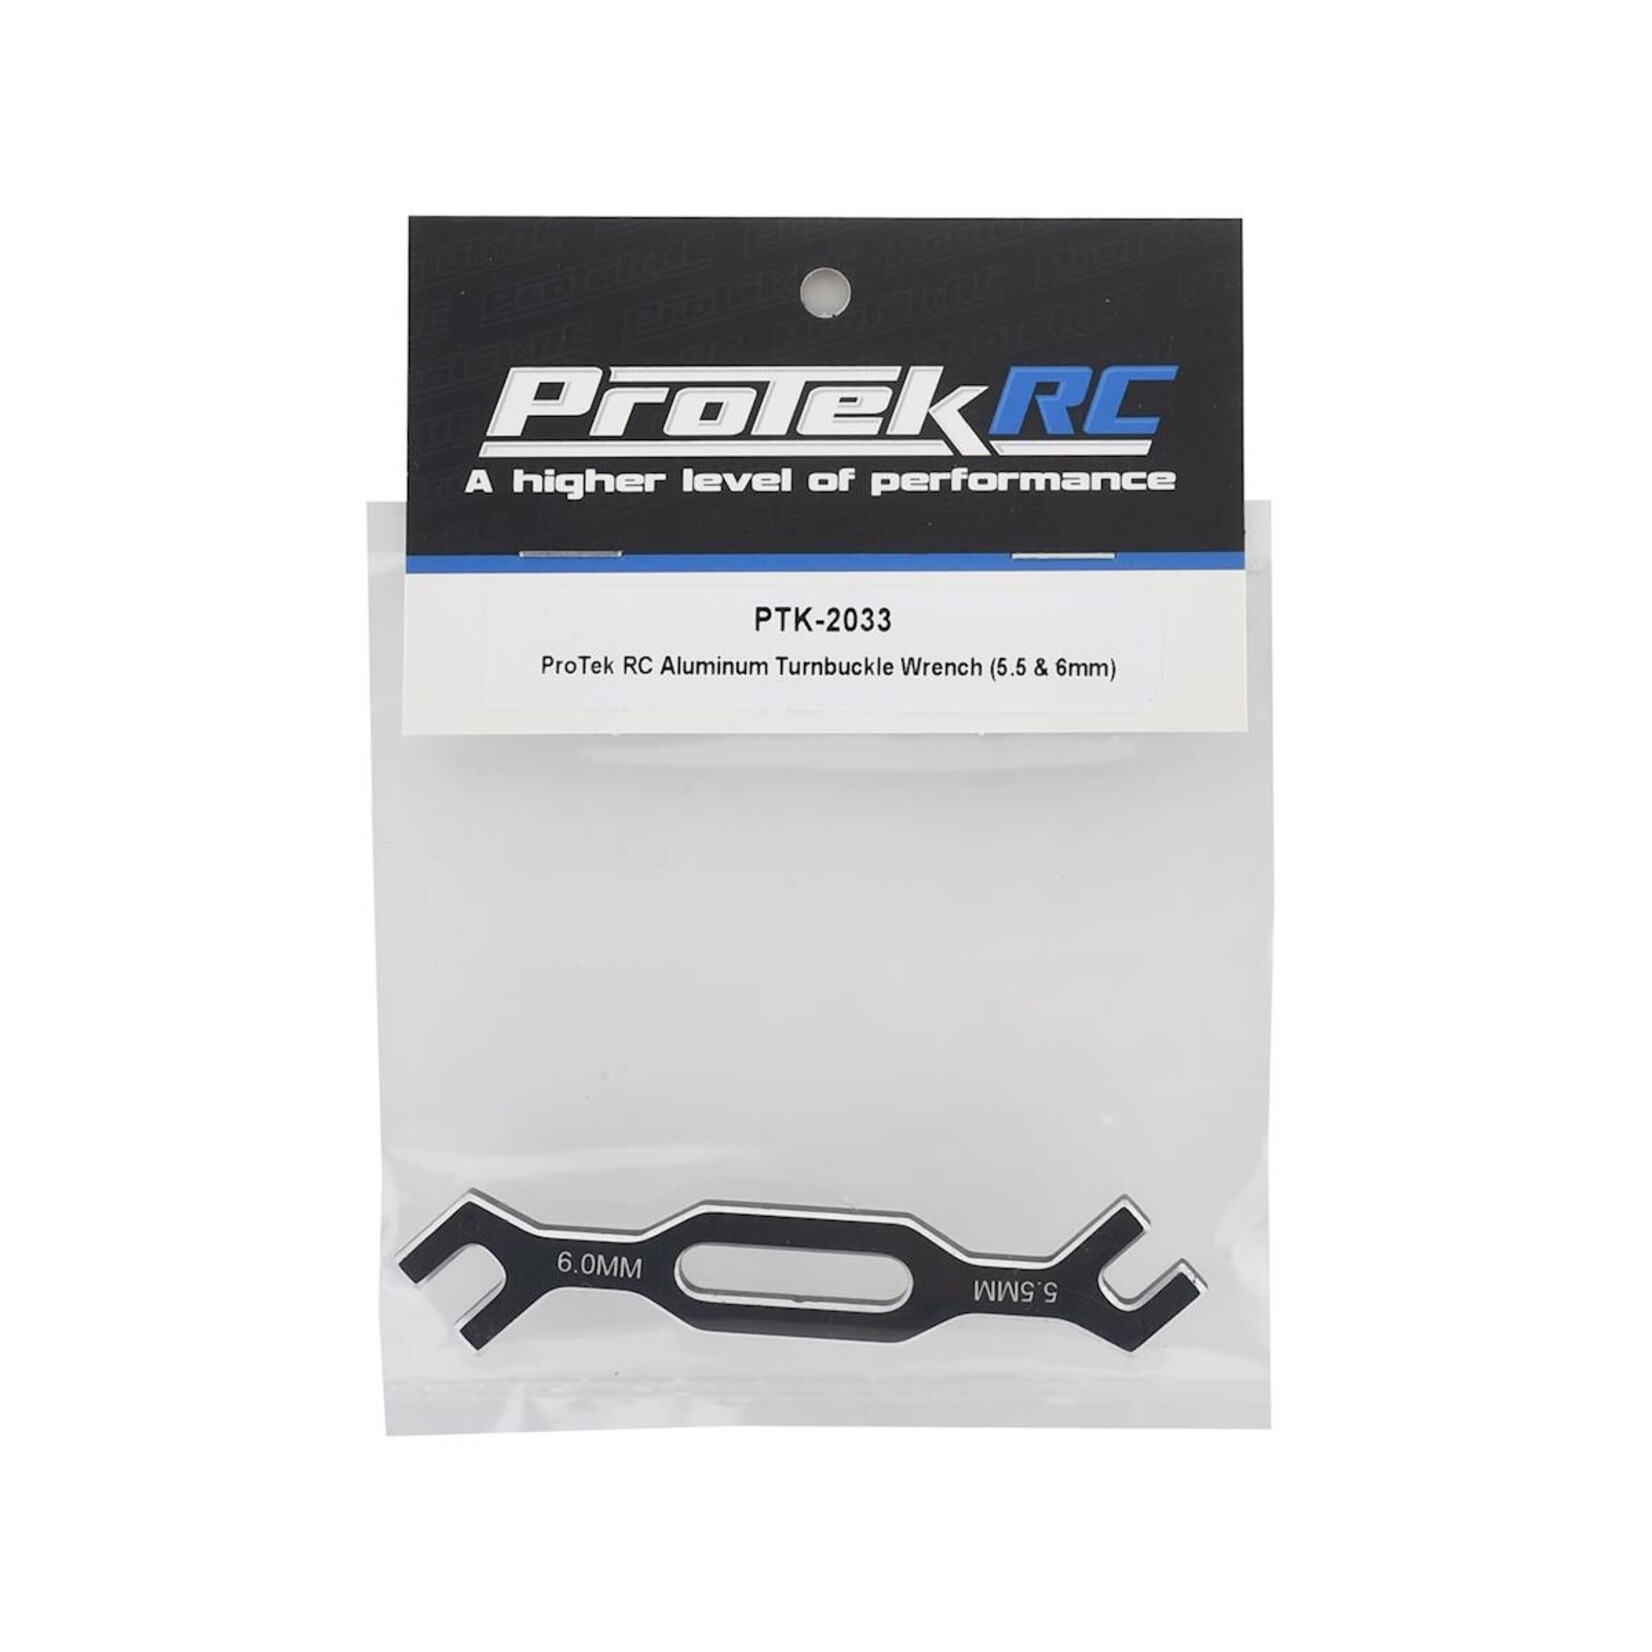 ProTek RC ProTek RC Aluminum Turnbuckle Wrench (5.5 & 6mm) #PTK-2033